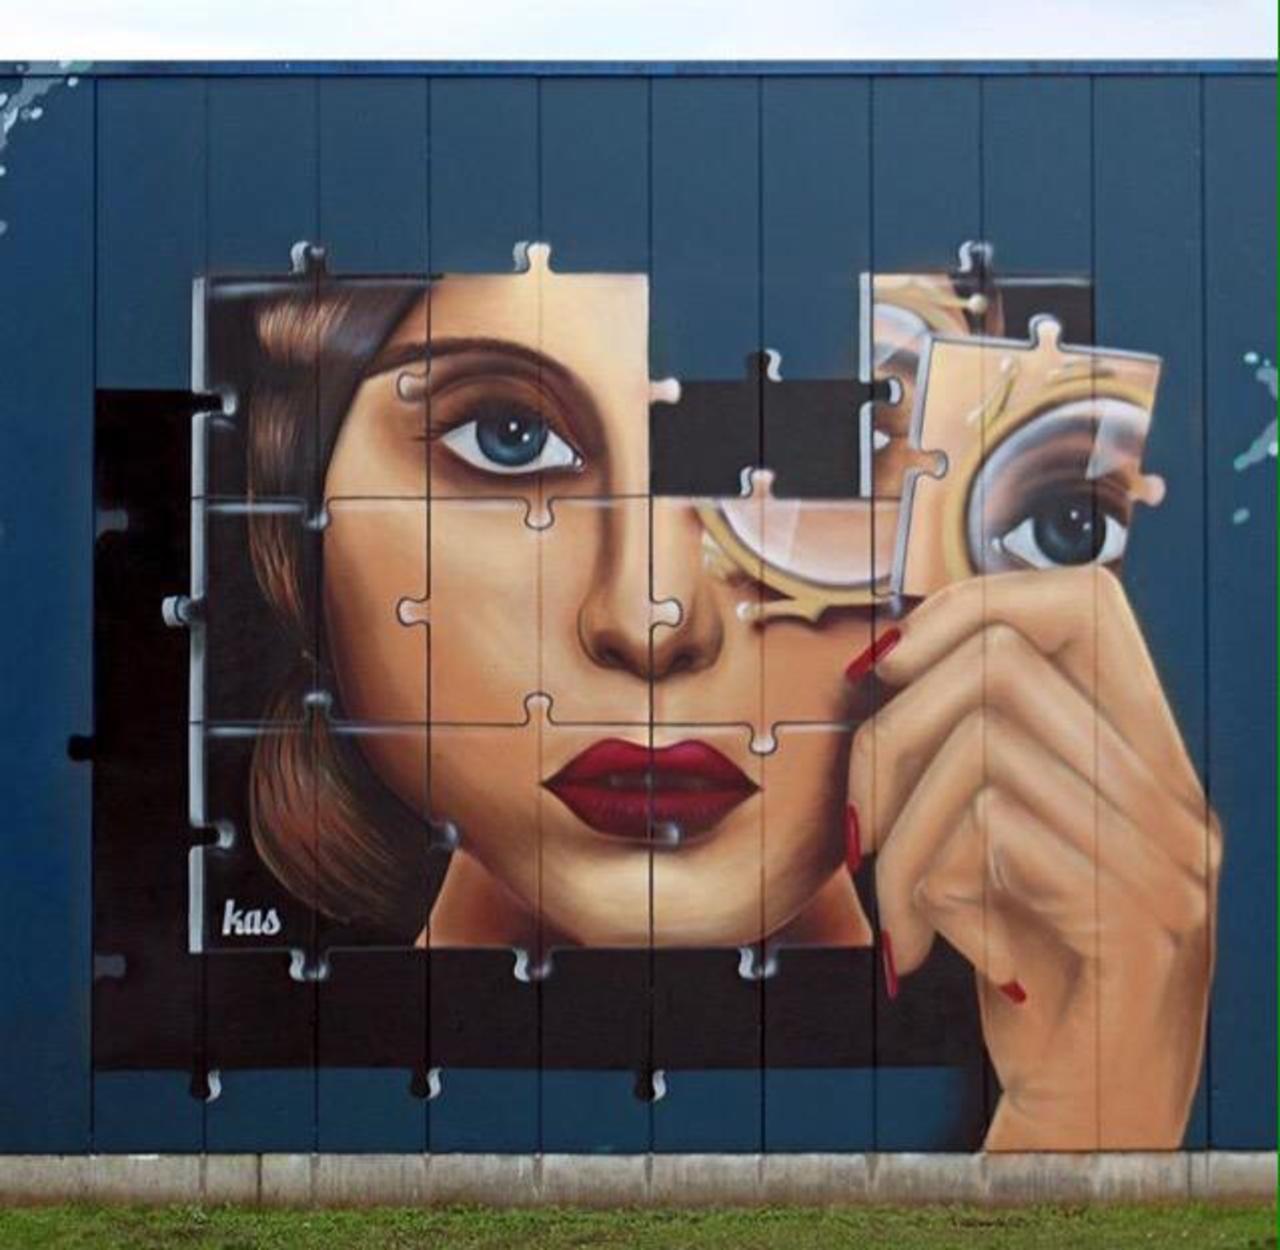 Kas Art's new Street Art "Piece of me" in Aalst Belgium 

#art #graffiti #mural #streetart http://t.co/S9aJFFOl0x